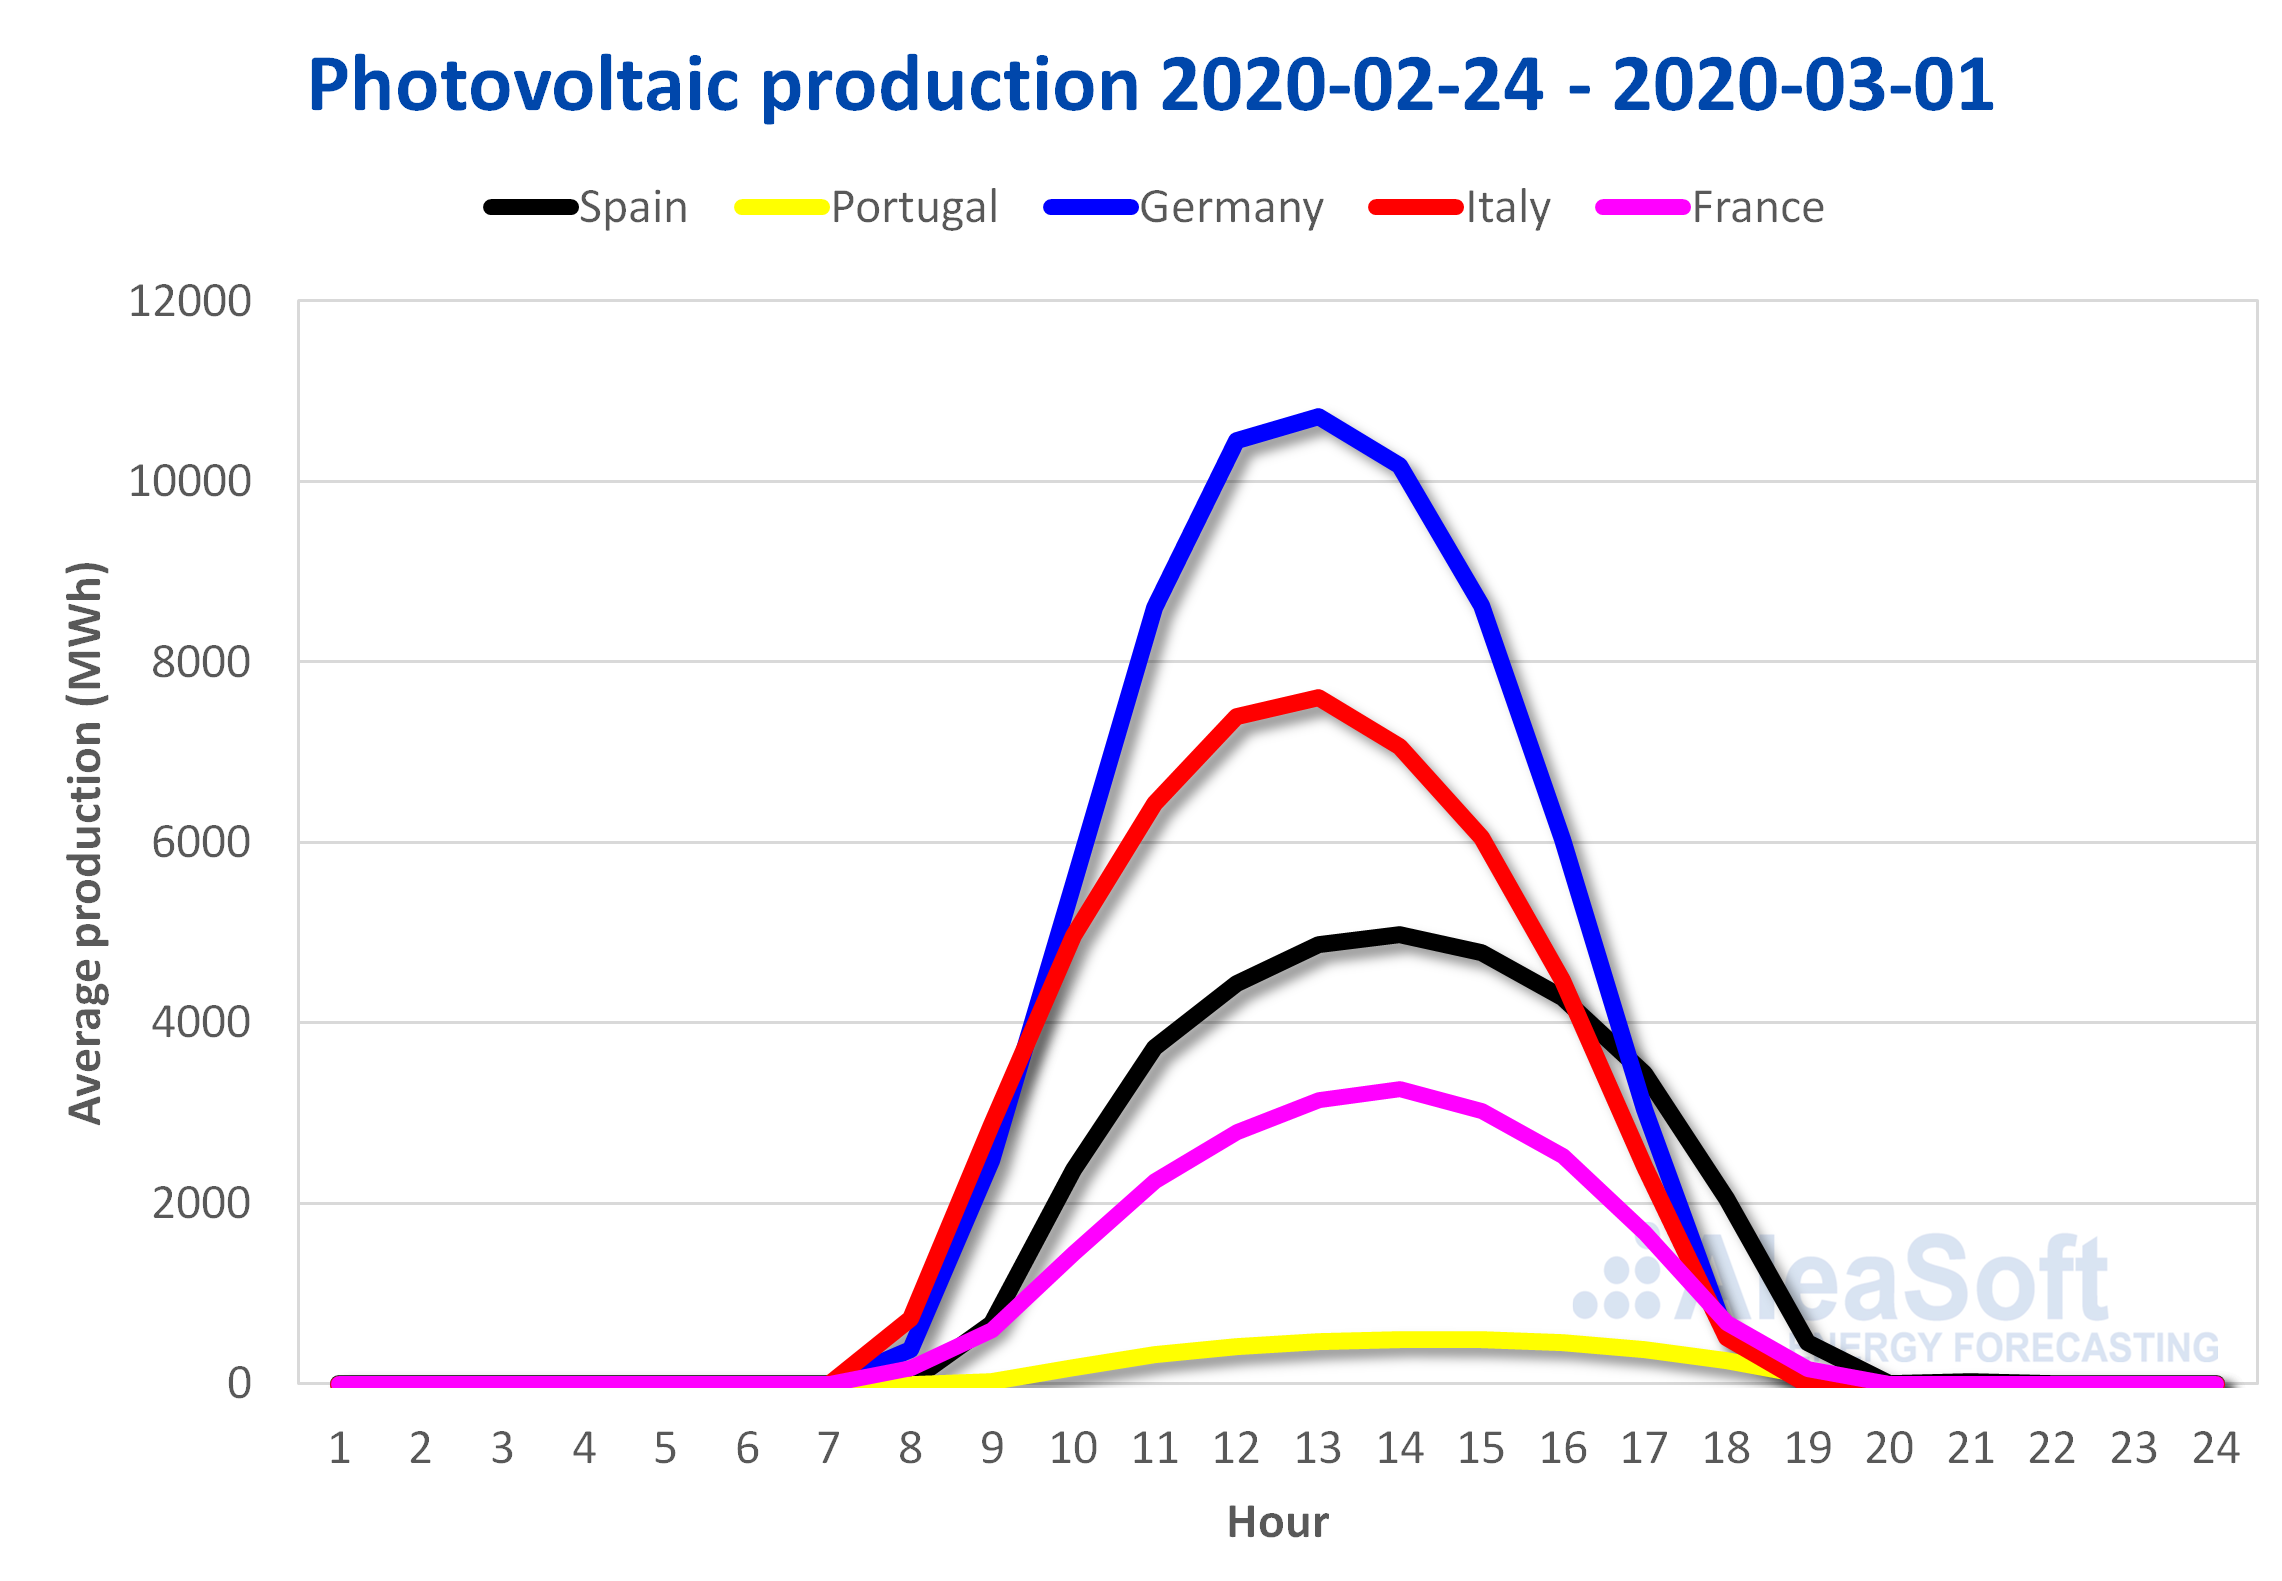 AleaSoft - Solar photovoltaic production profile Europe